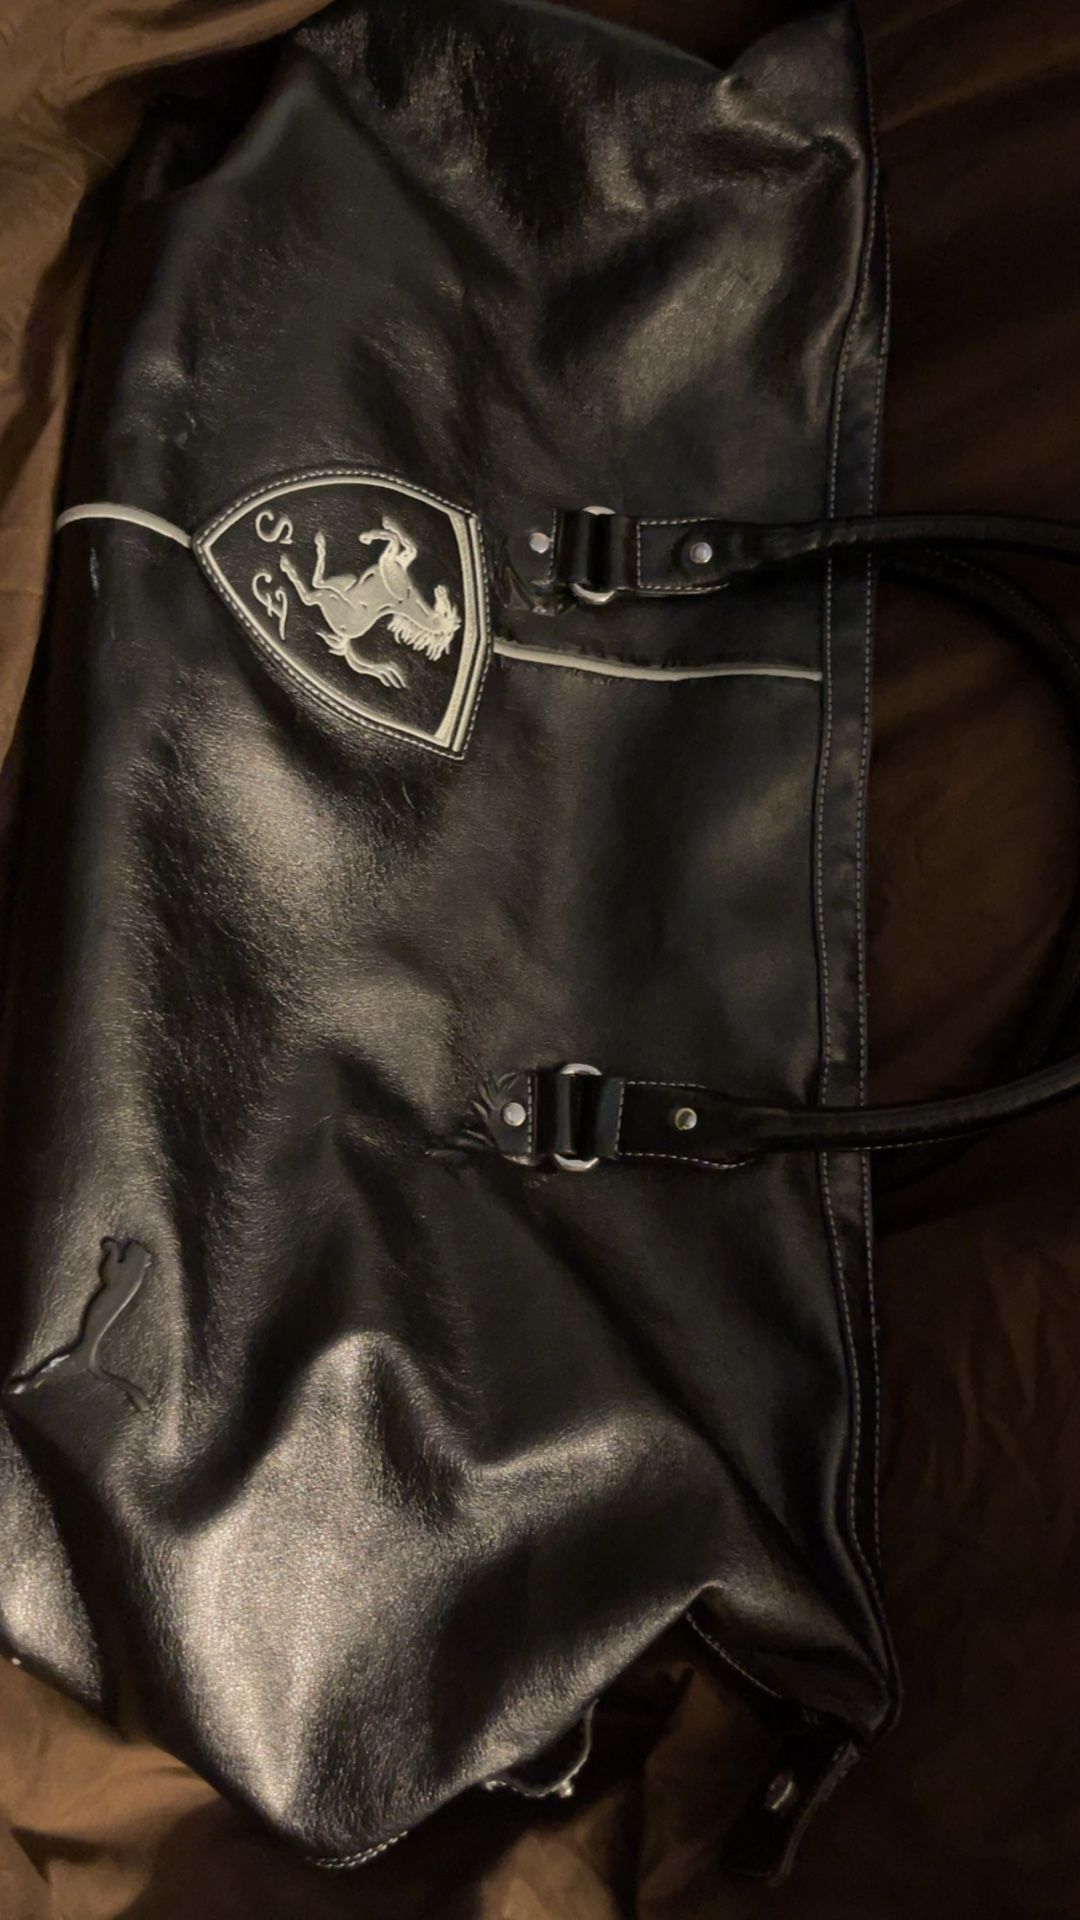 Black Ferrari Puma large travel duffel bag PU leather